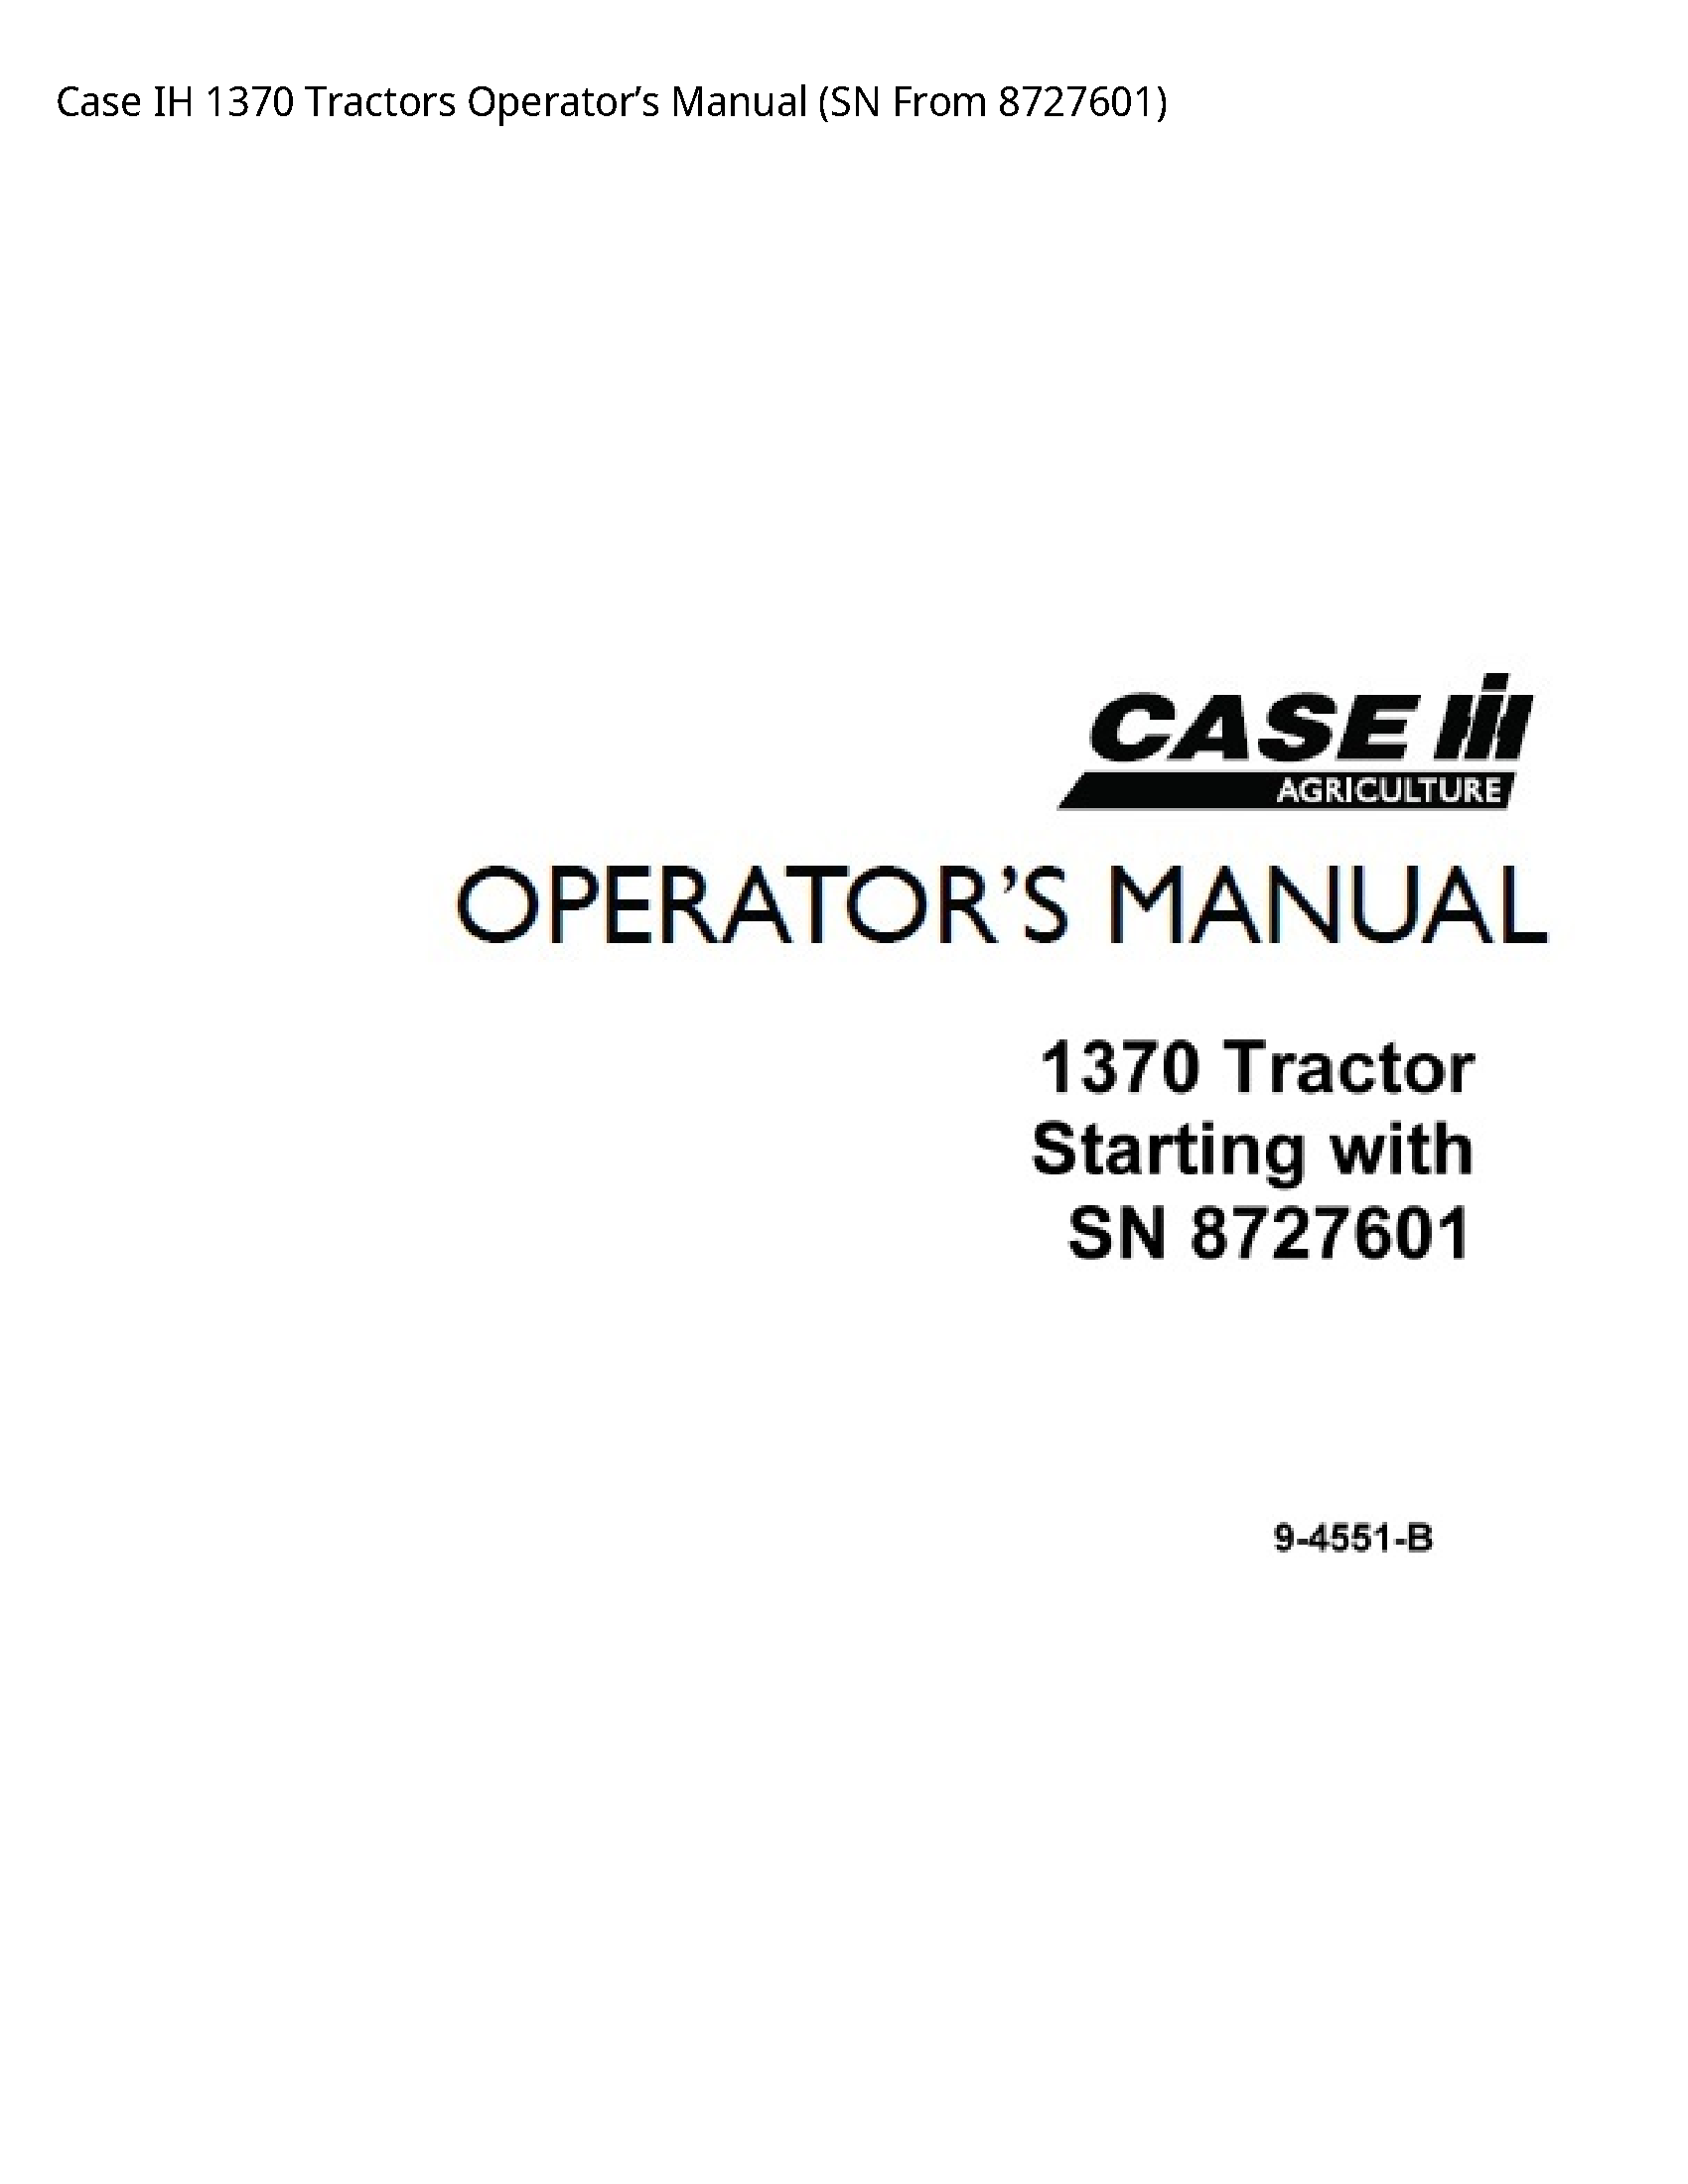 Case/Case IH 1370 IH Tractors Operator’s manual